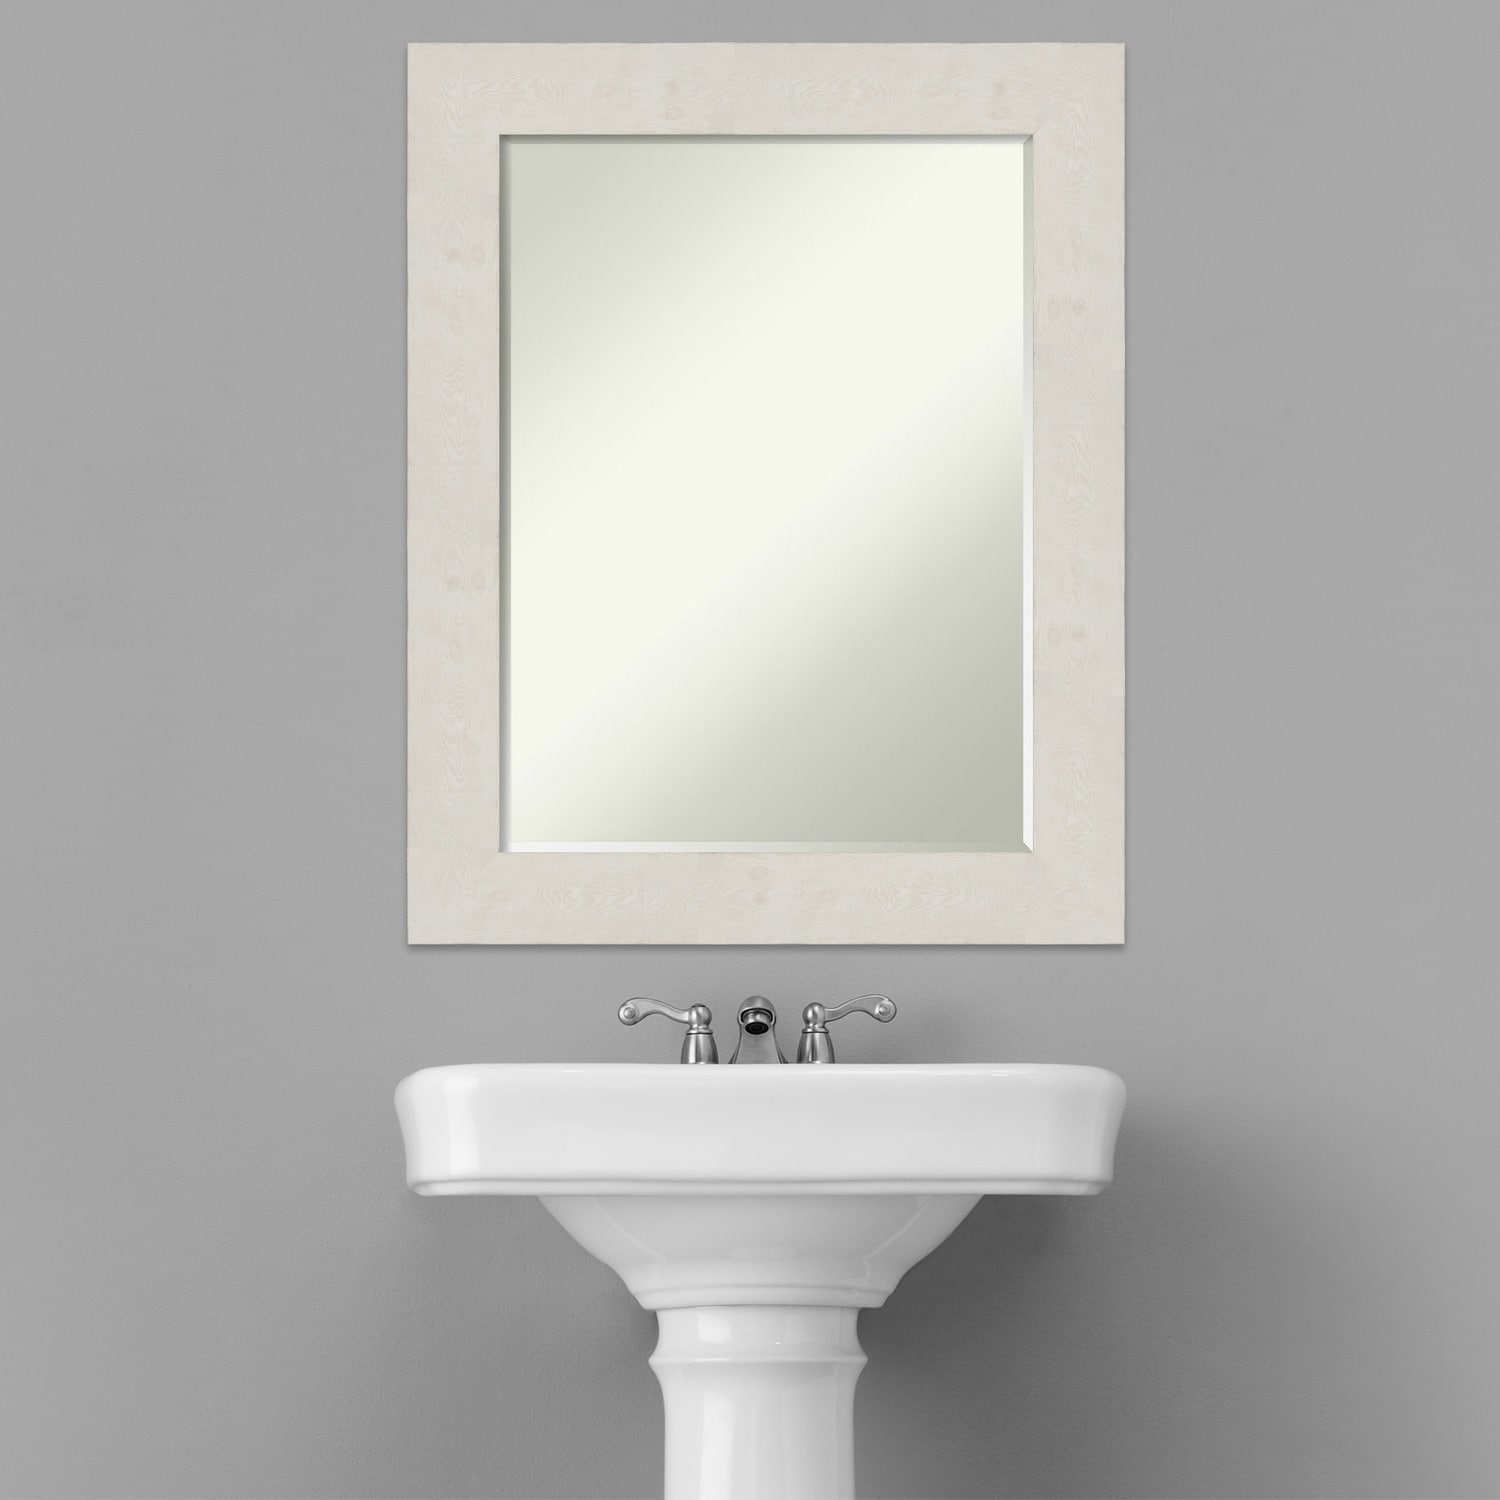 Petite Bevel Bathroom Wall Mirror Rustic Plank White Frame 23 x 29 in  Bed Bath  Beyond 36547253